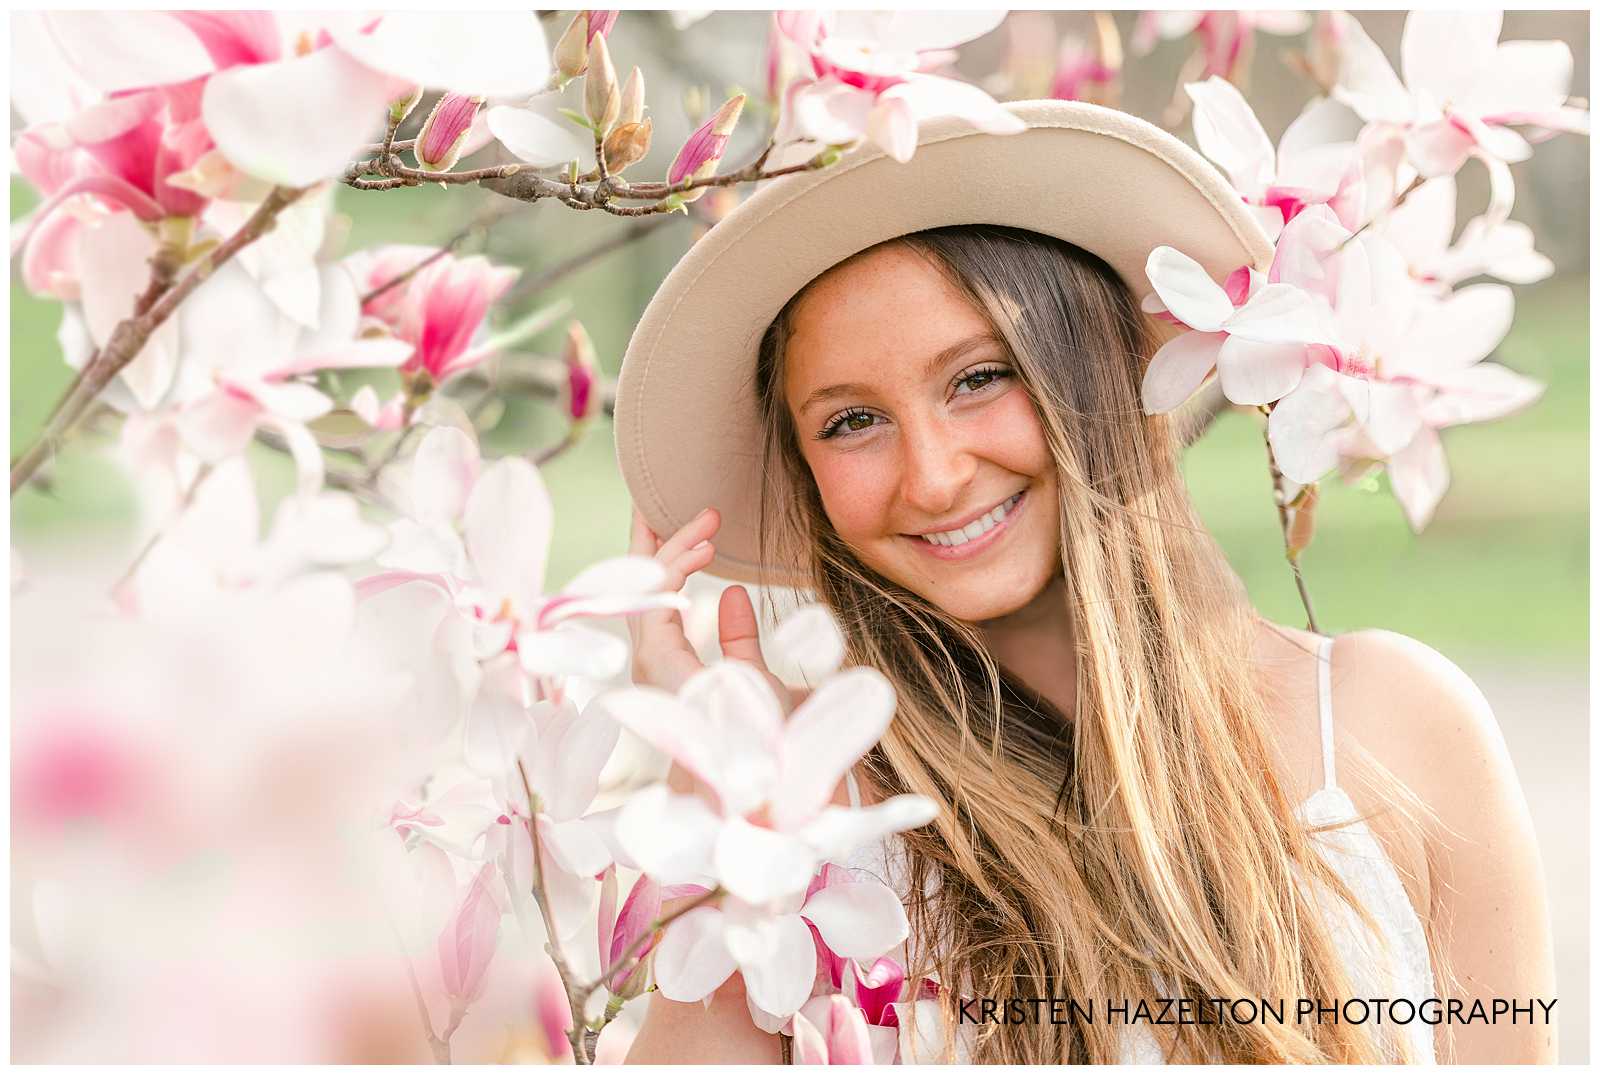 Senior girl with tan hat standing next to pink magnolias flowers for her elmhurst senior photos.